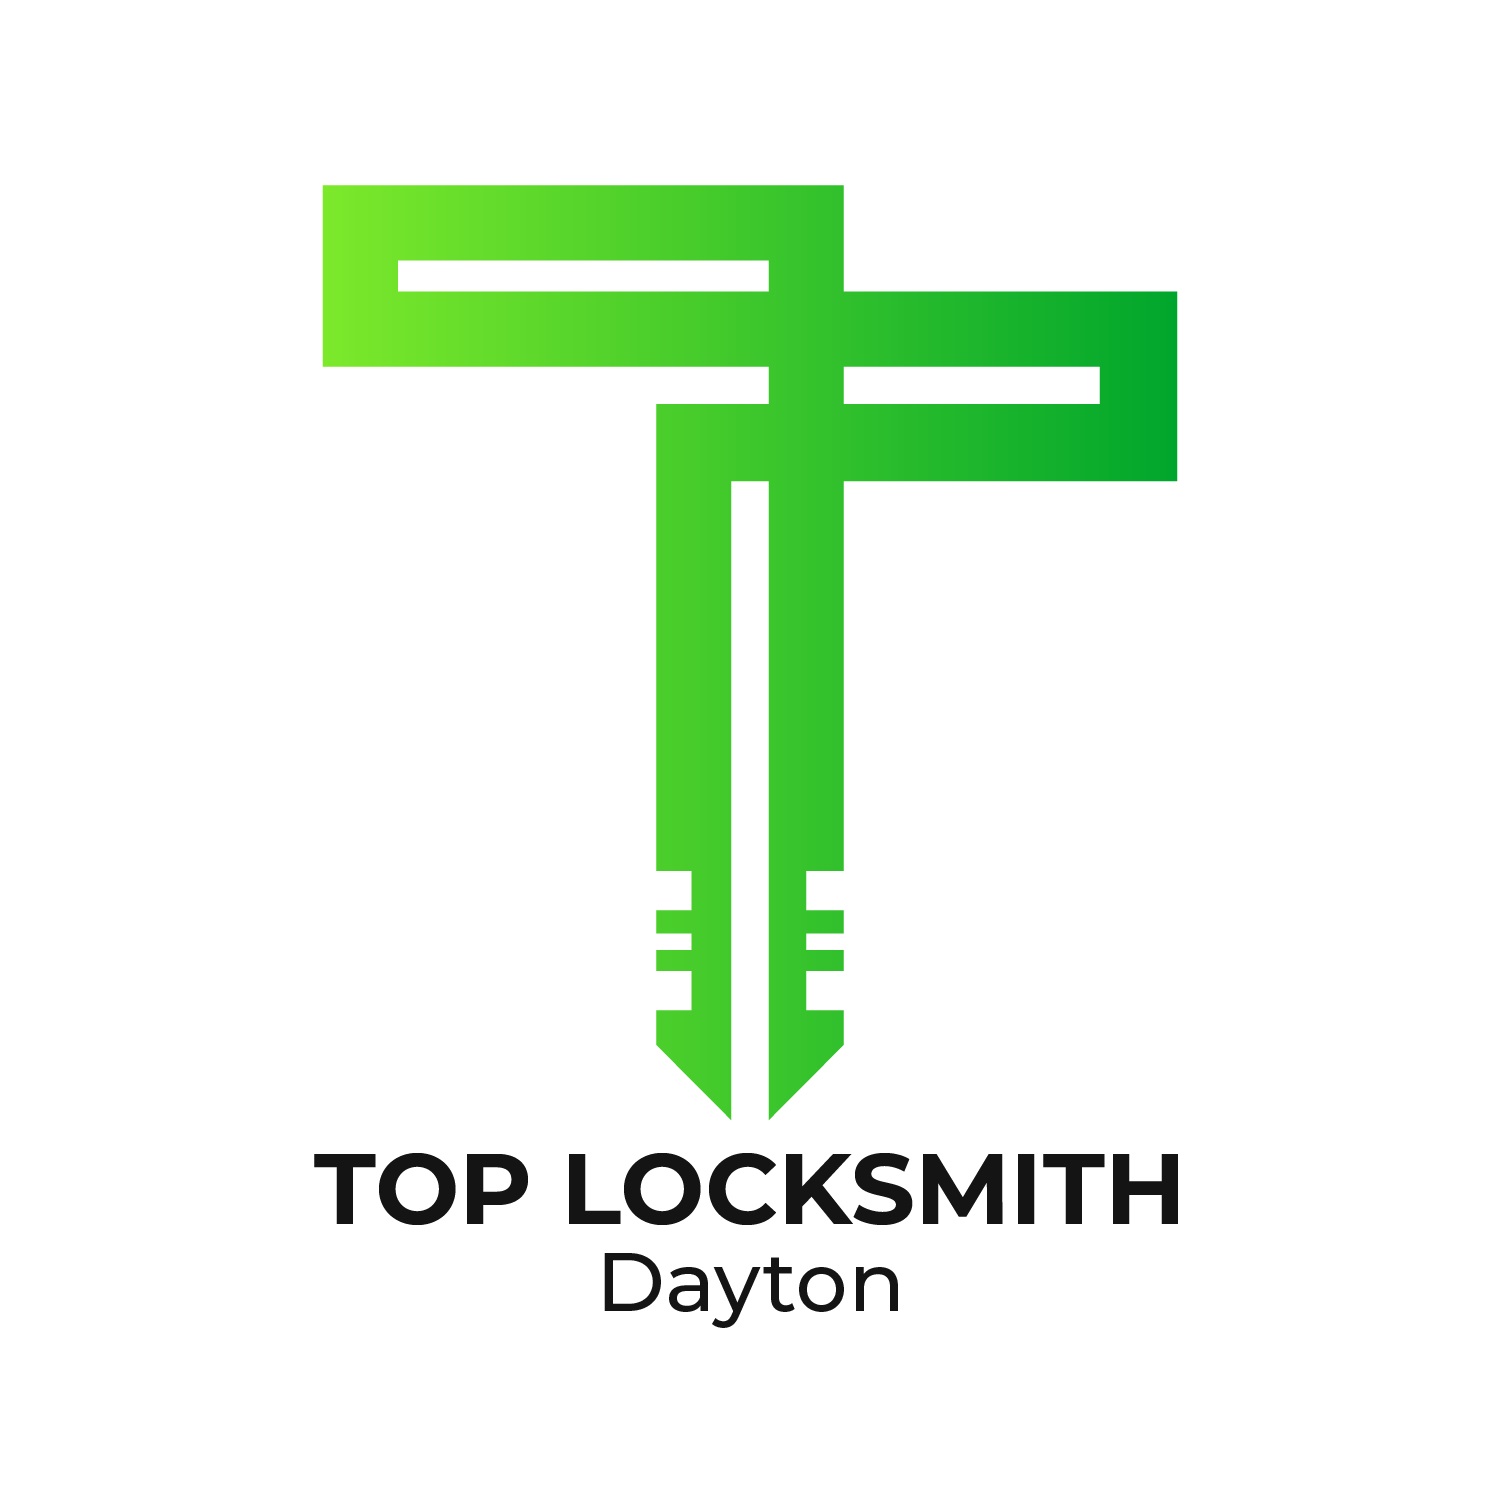 Top Locksmith Dayton